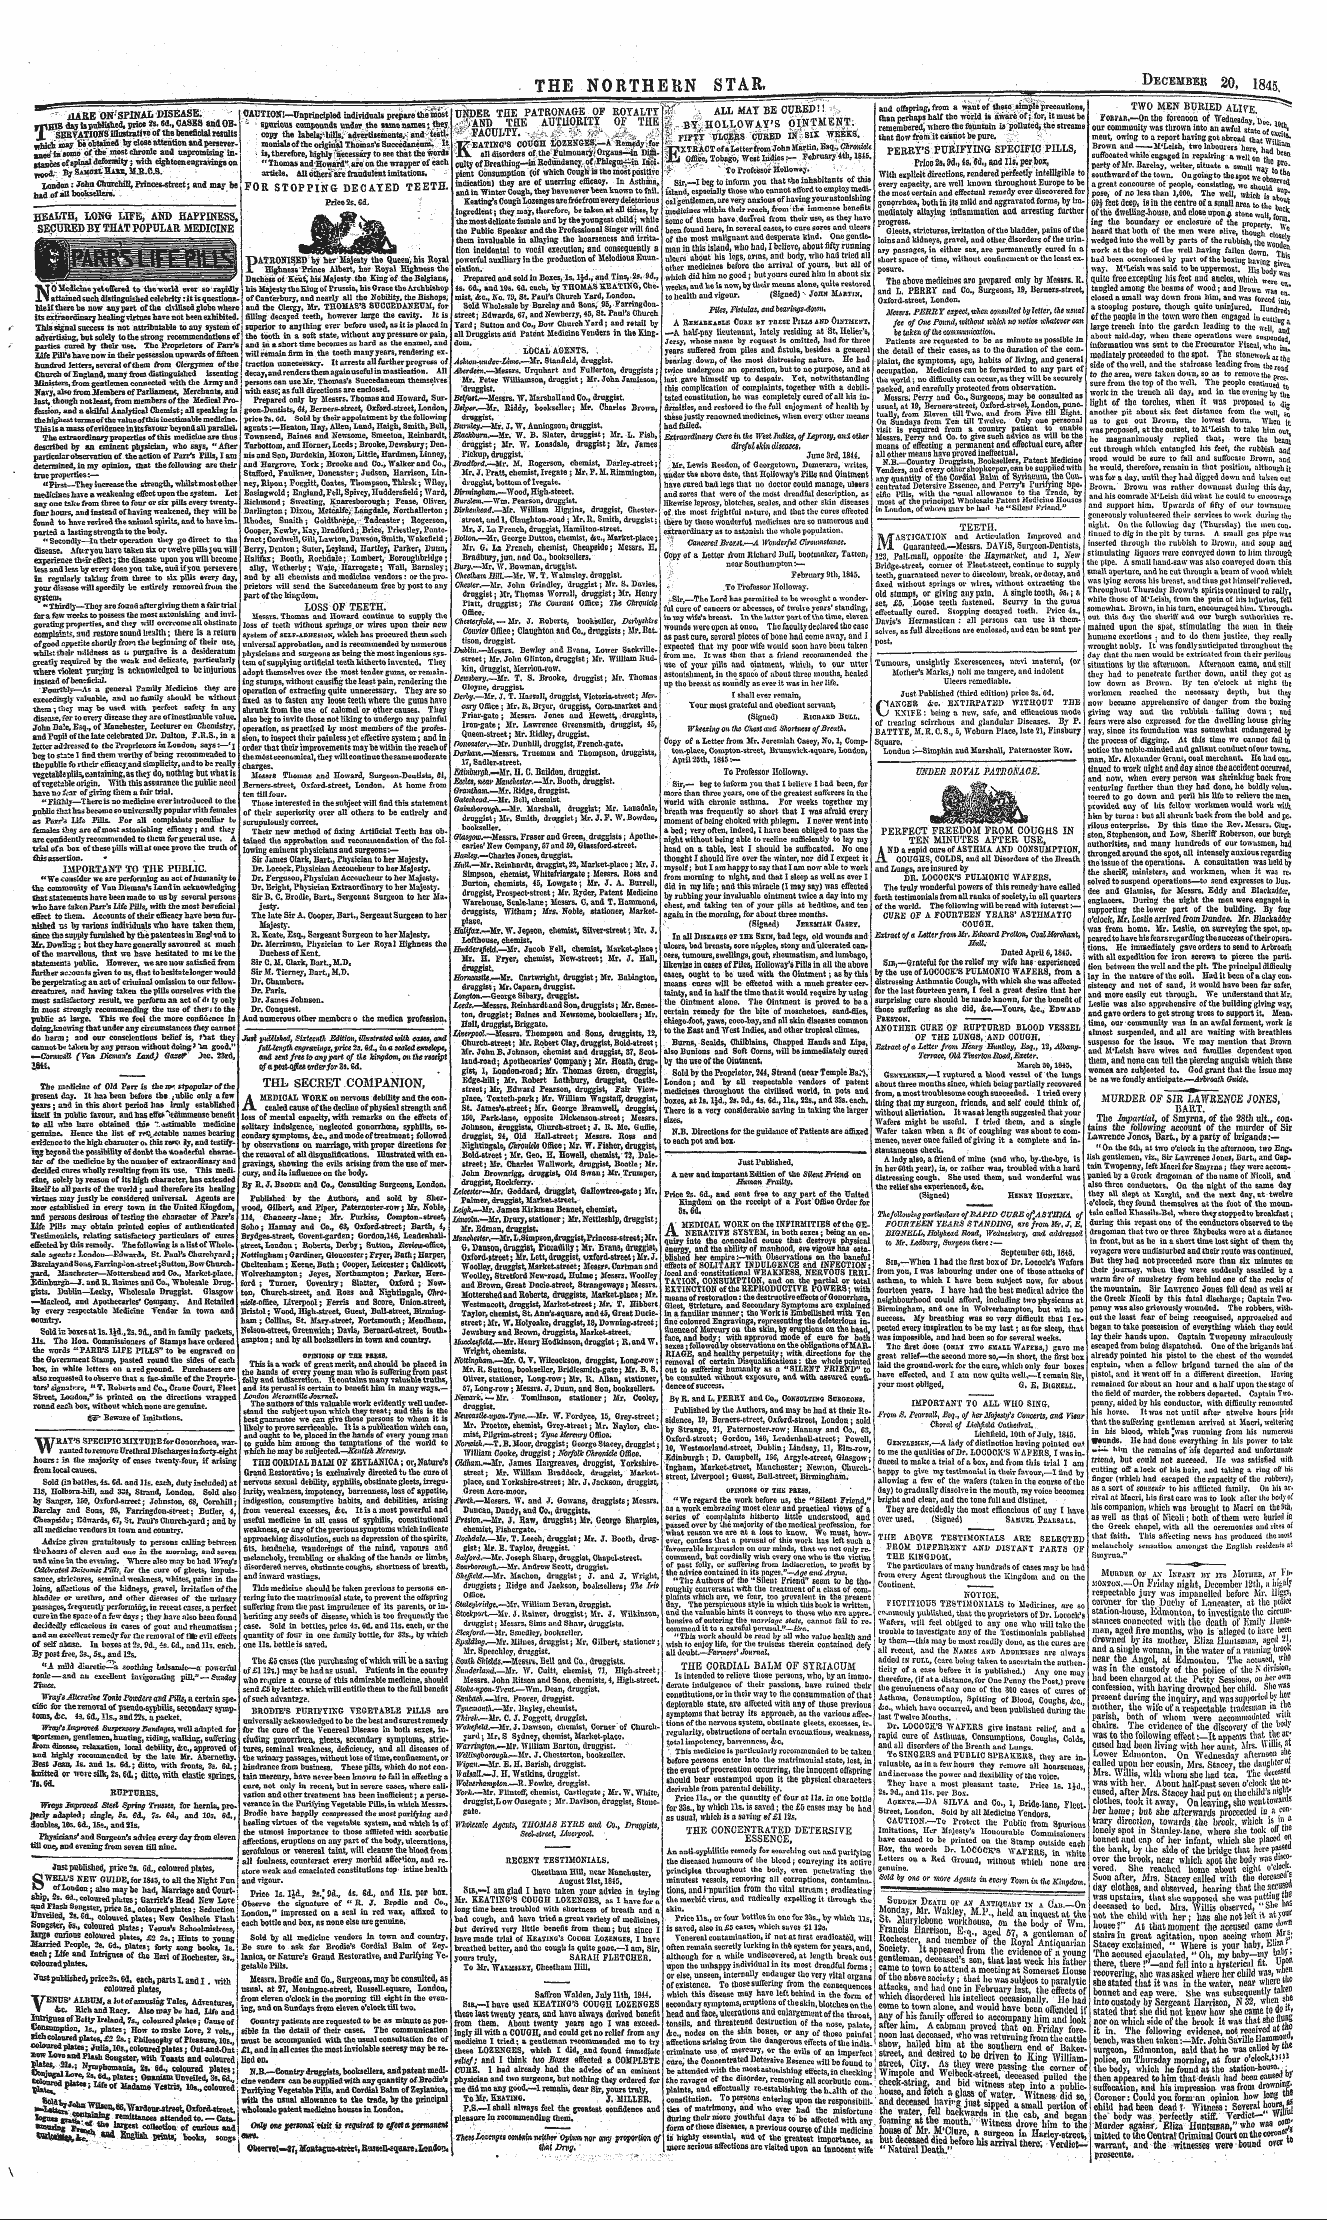 Northern Star (1837-1852): jS F Y, 4th edition - Ad00217